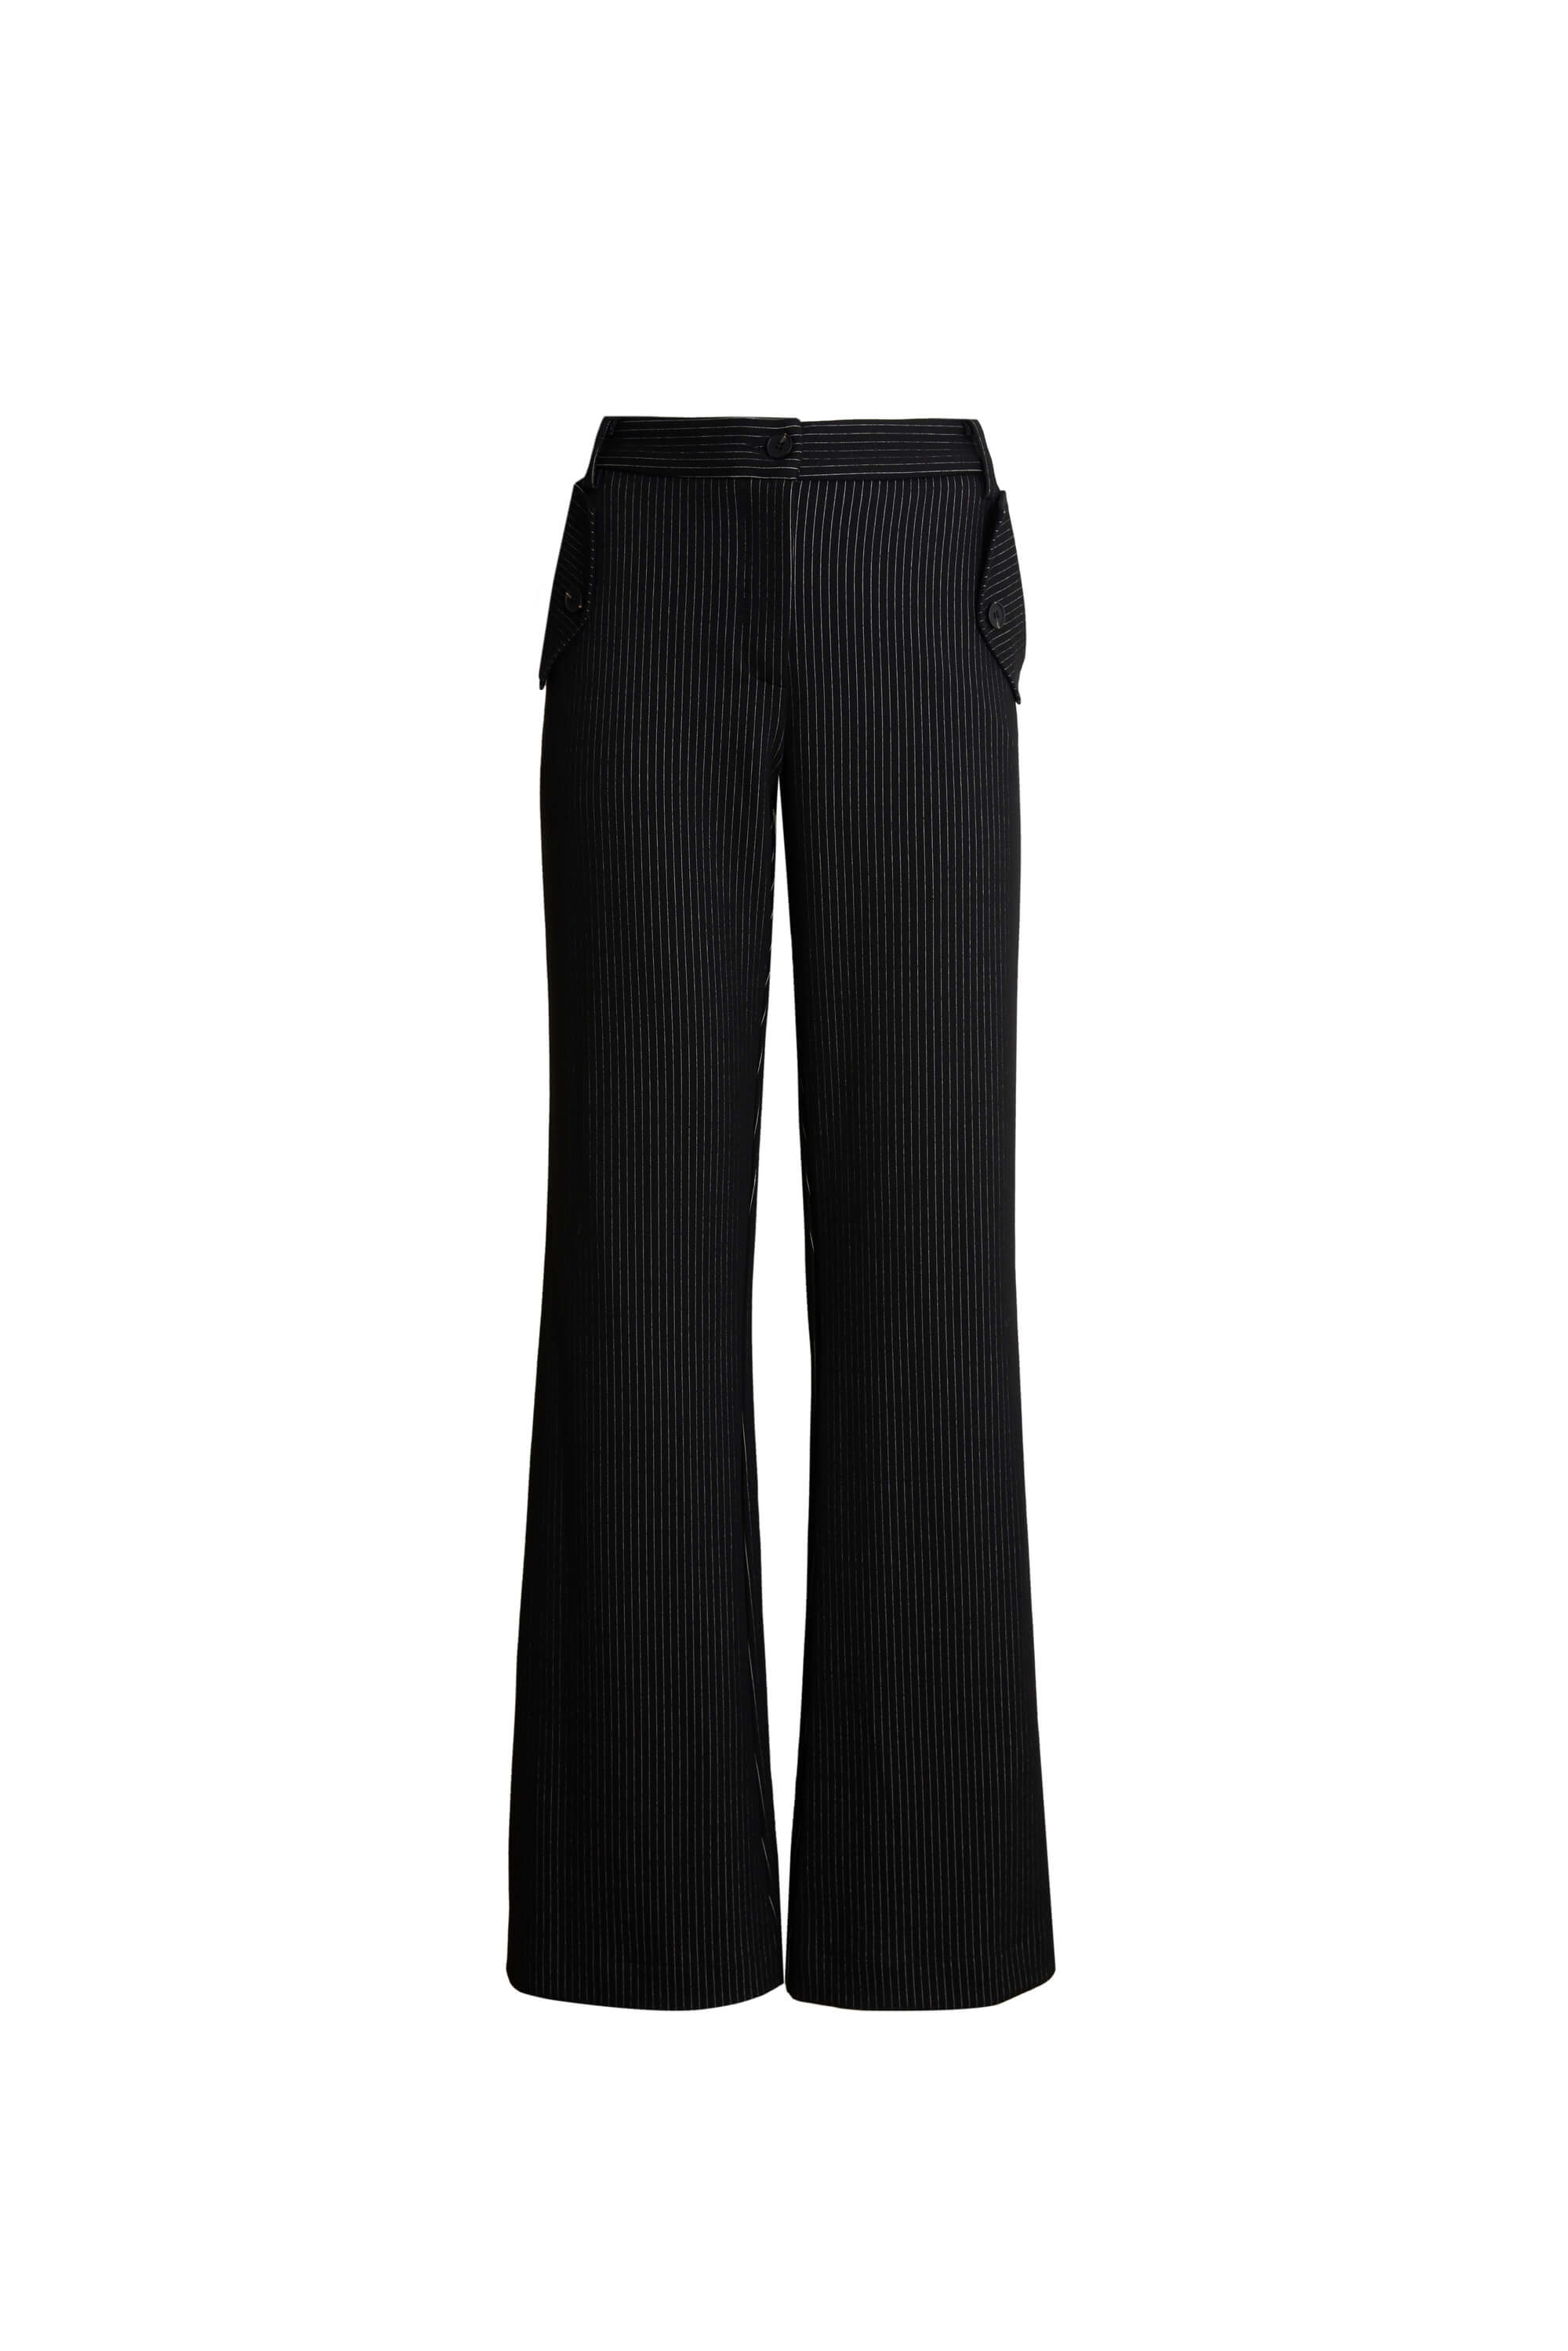 Women’s Black Pin Stripe Tailored Trousers XXXL James Lakeland